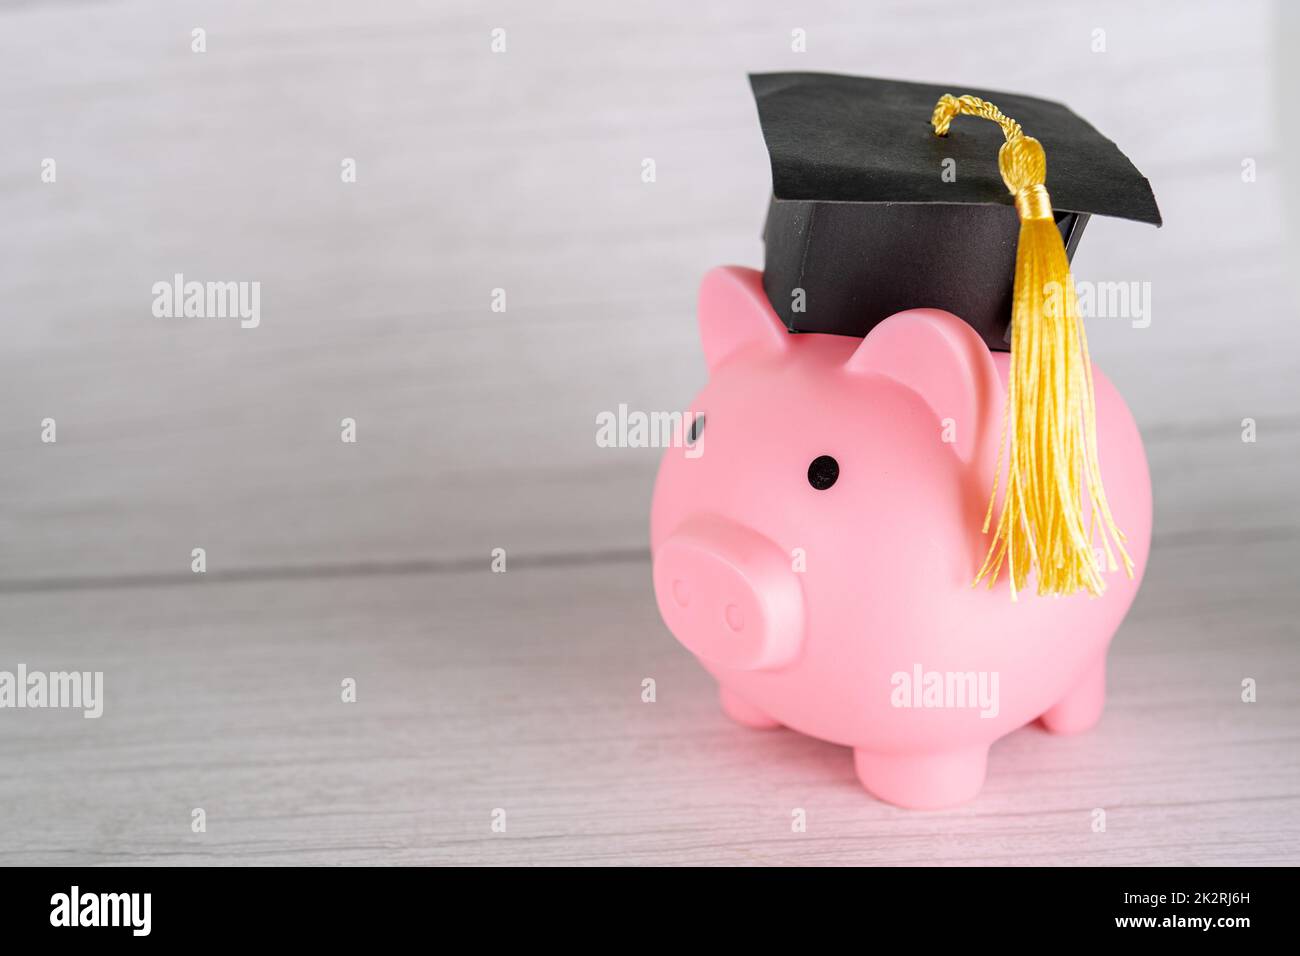 Piggy bank with graduation cap, Business finance education saving money scholarship concept. Stock Photo